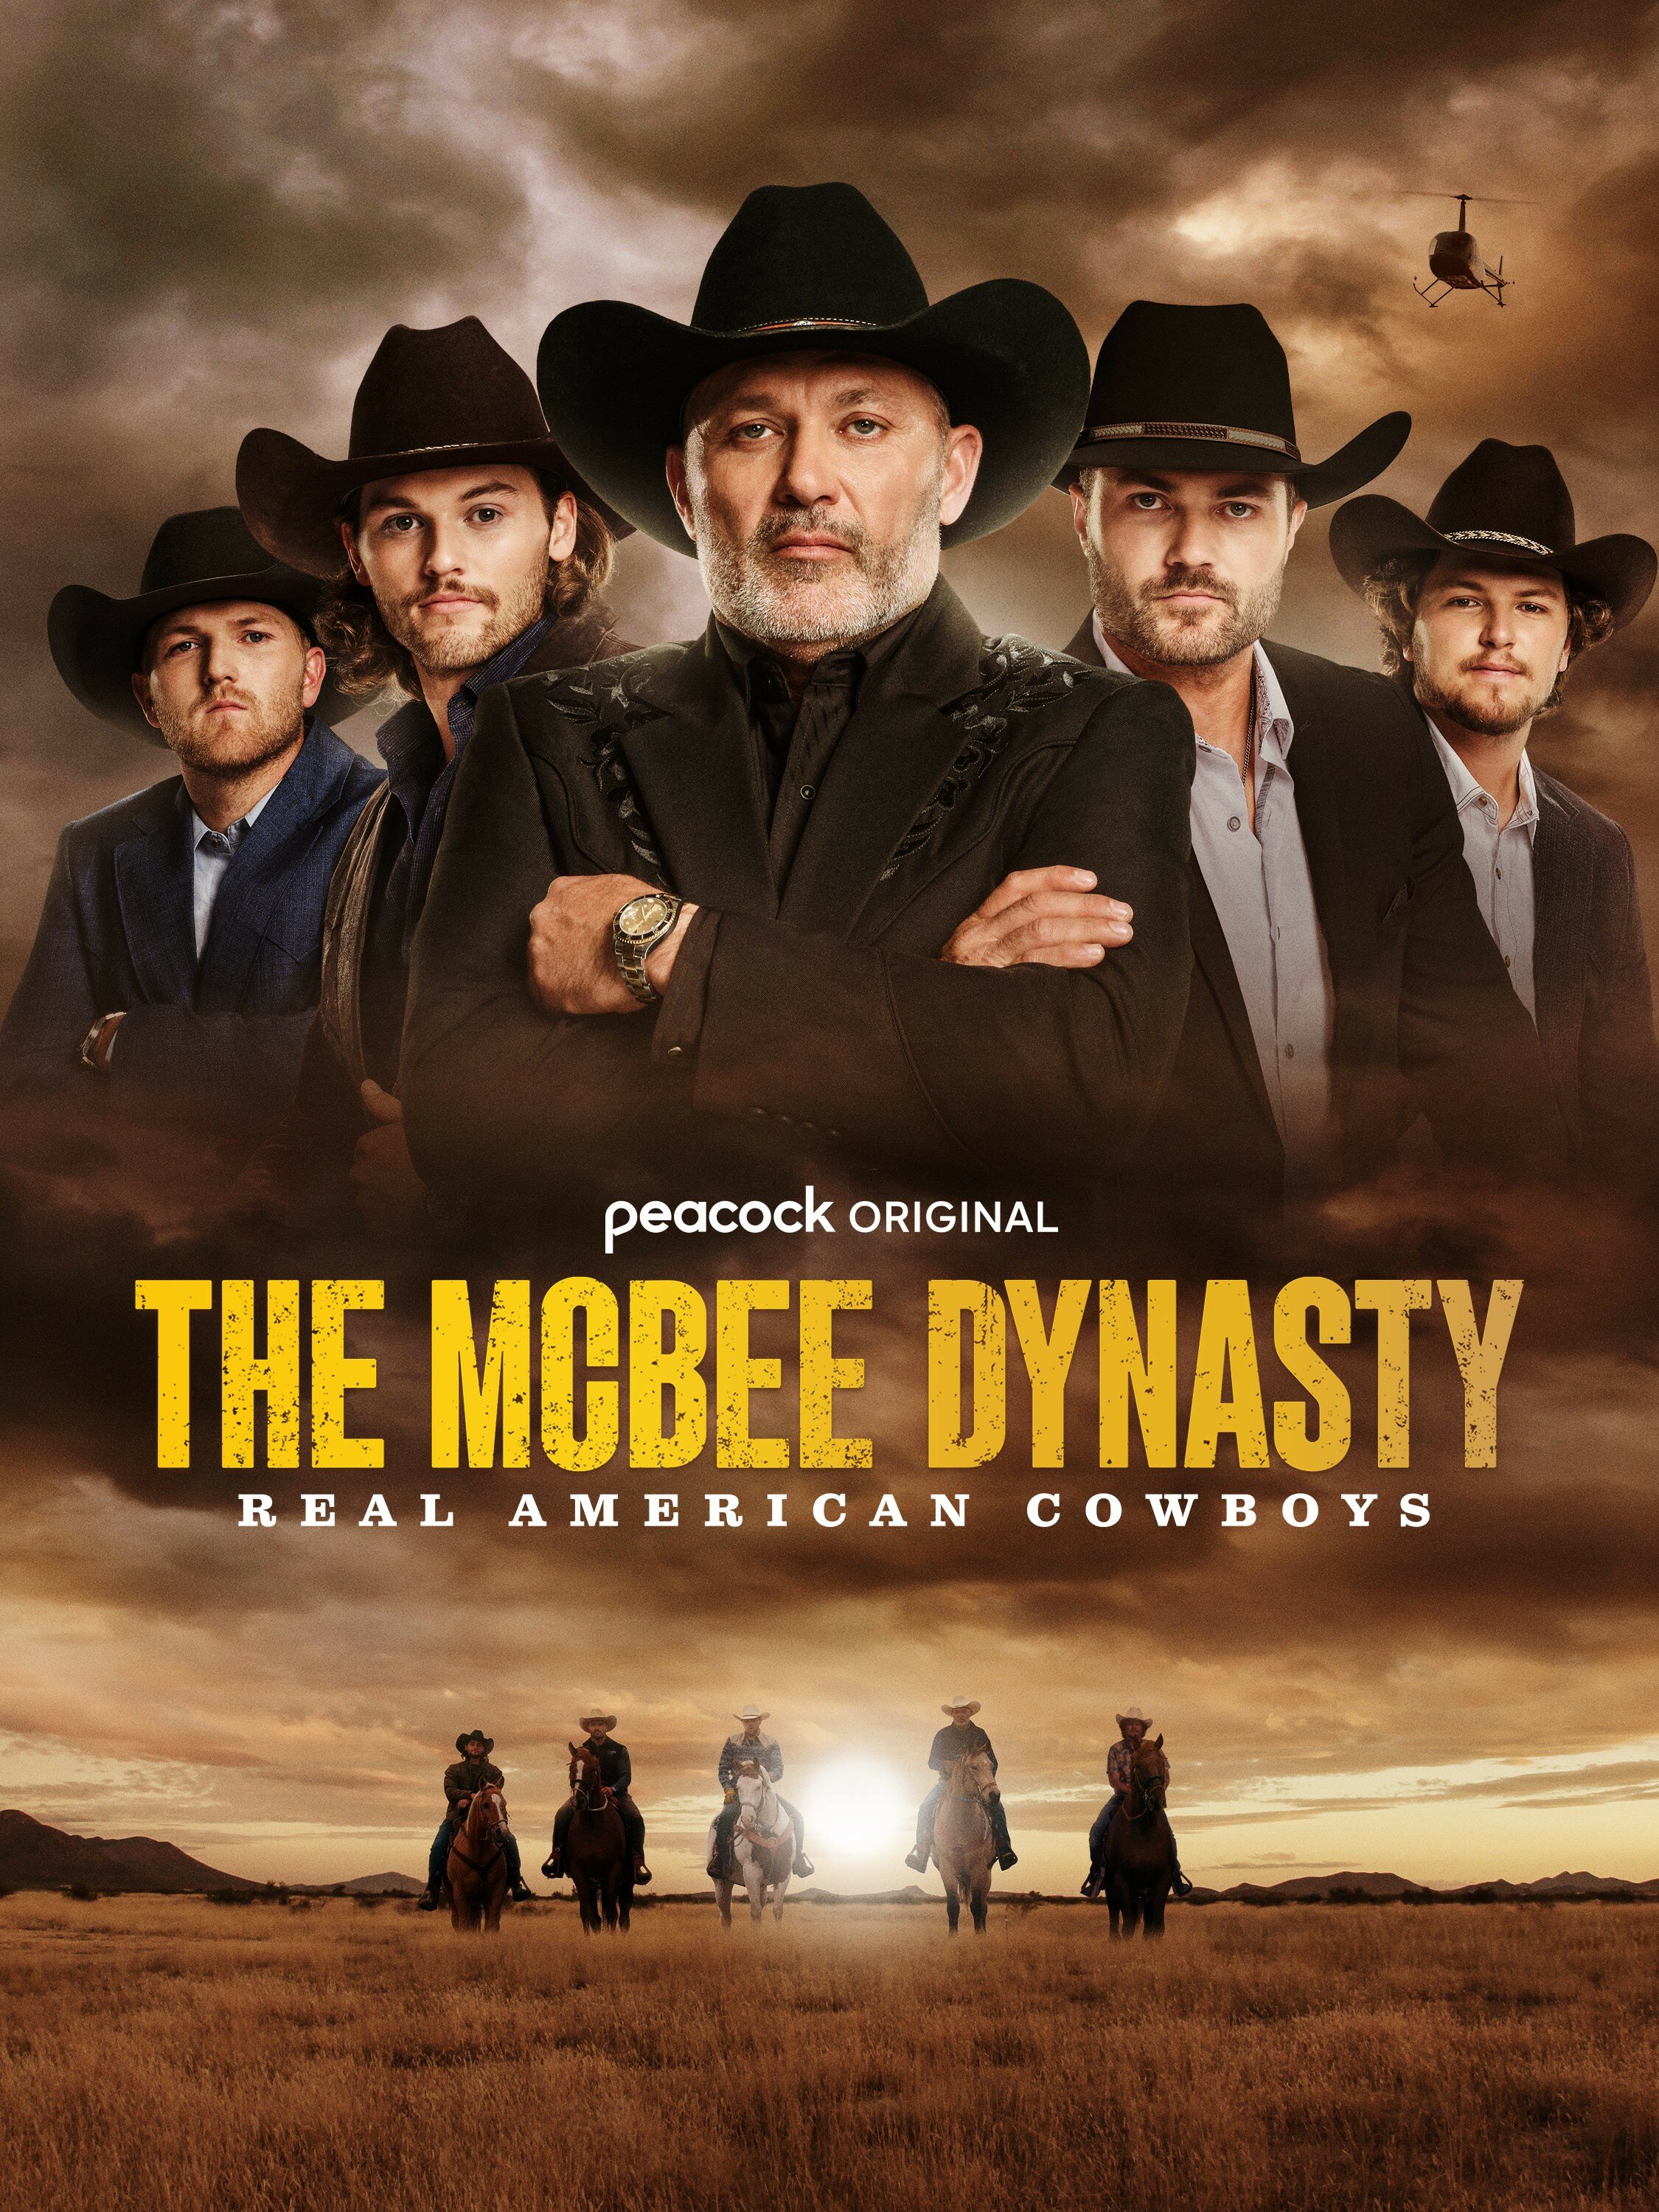 The McBee Dynasty: Real American Cowboys ne zaman